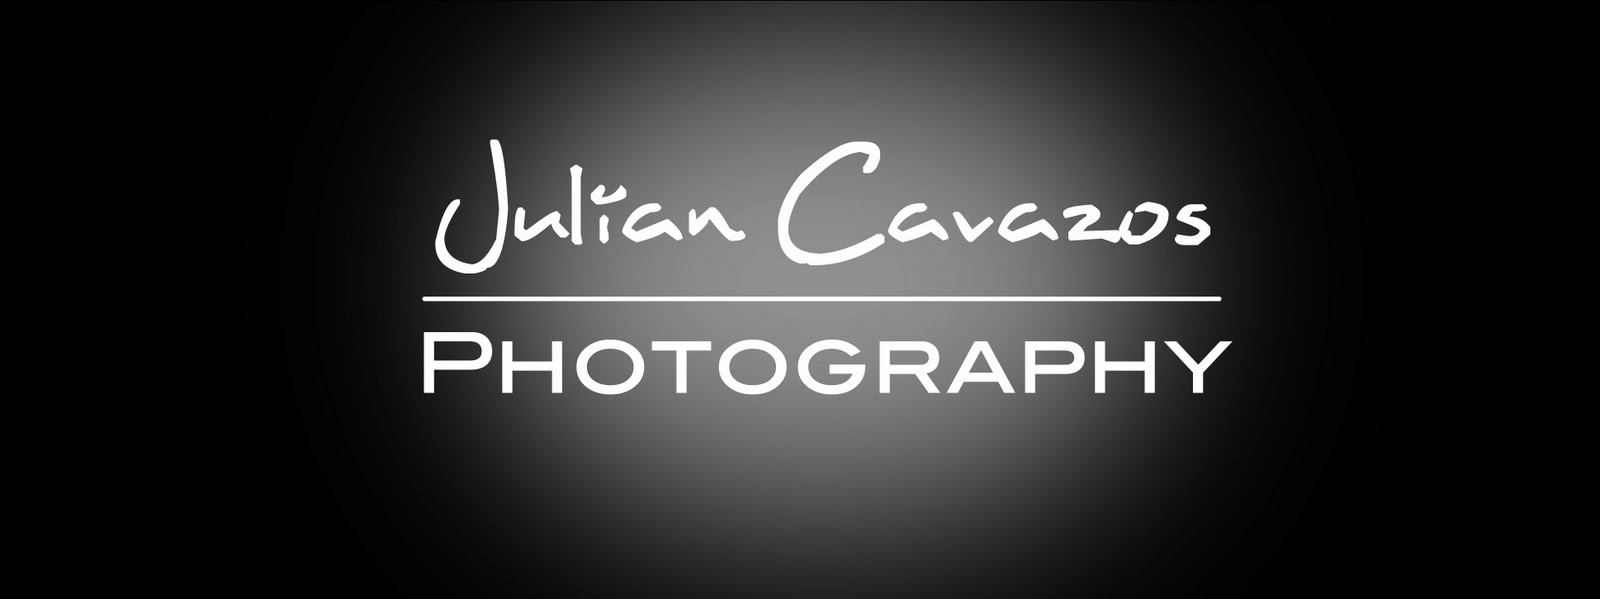 Julian Cavazos Photography